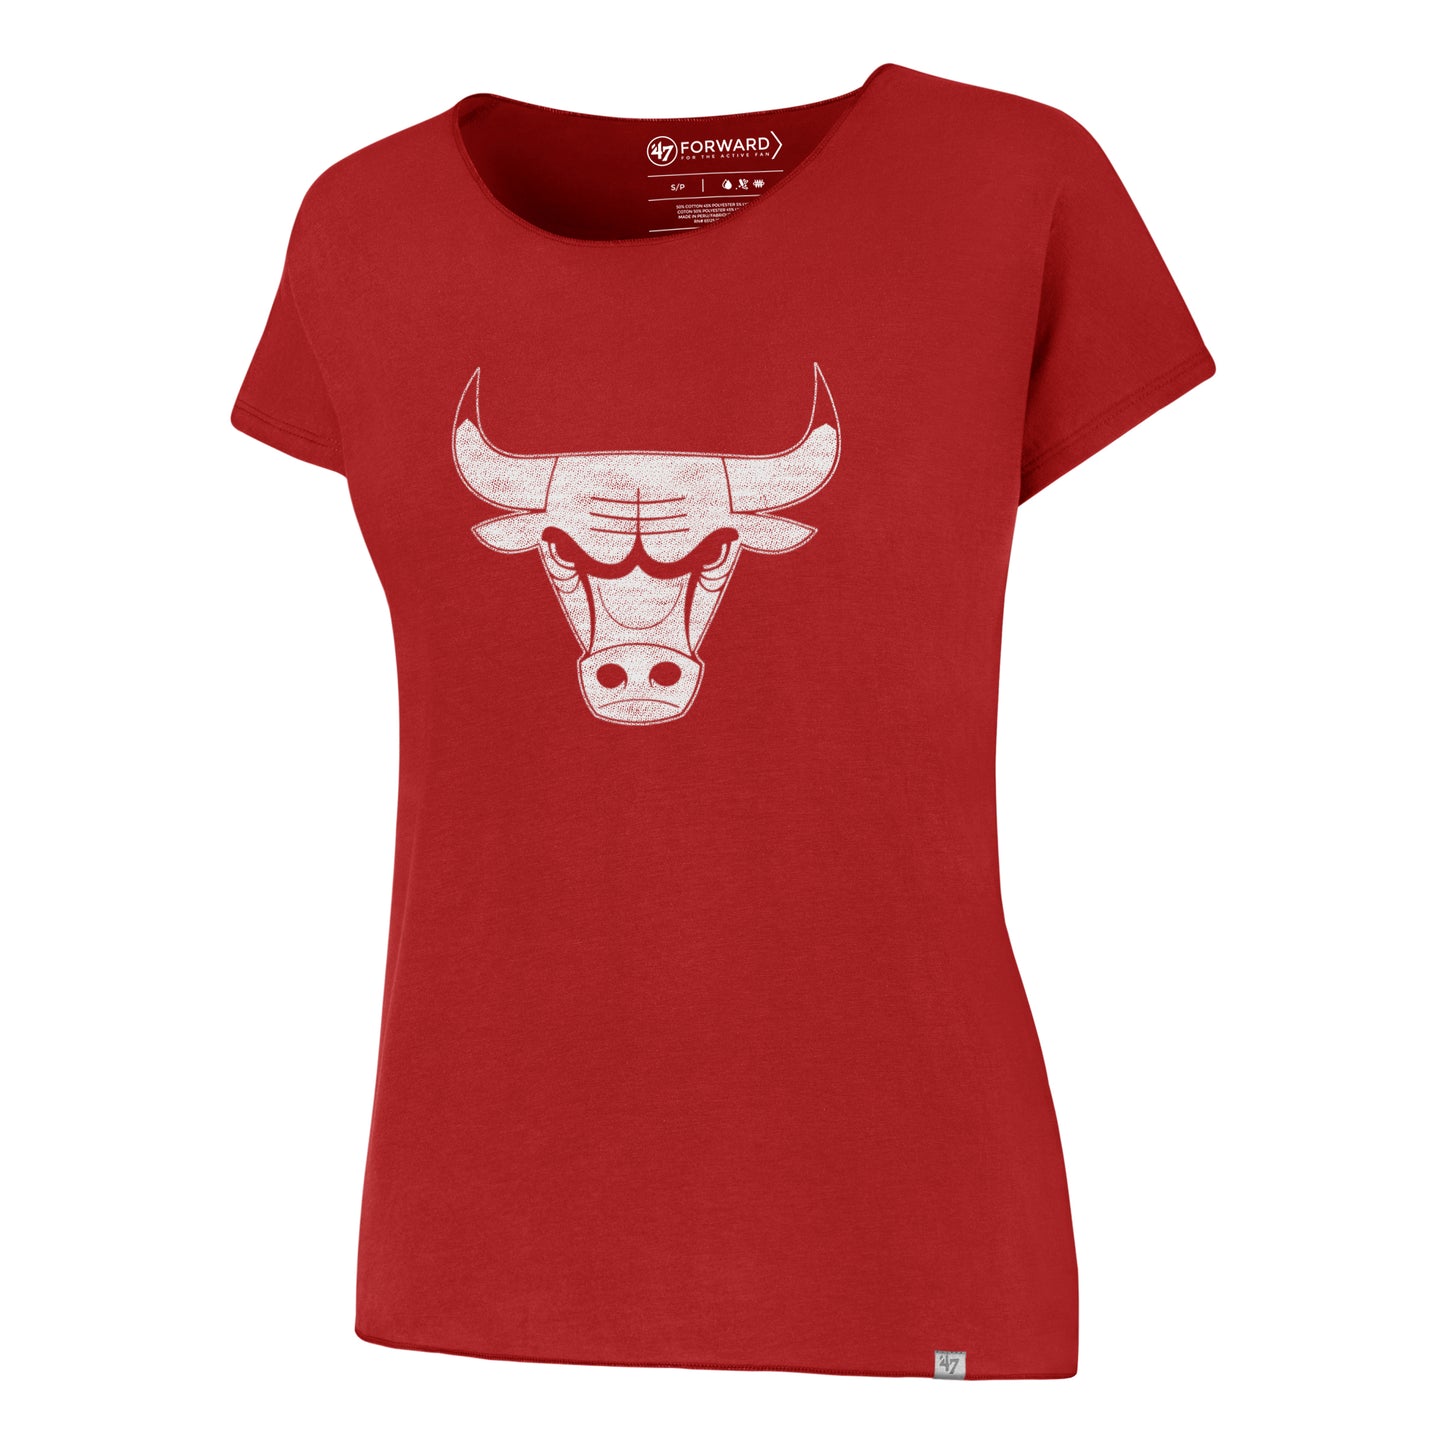 Chicago Bulls Women's Red Forward Flow Lumi Tee